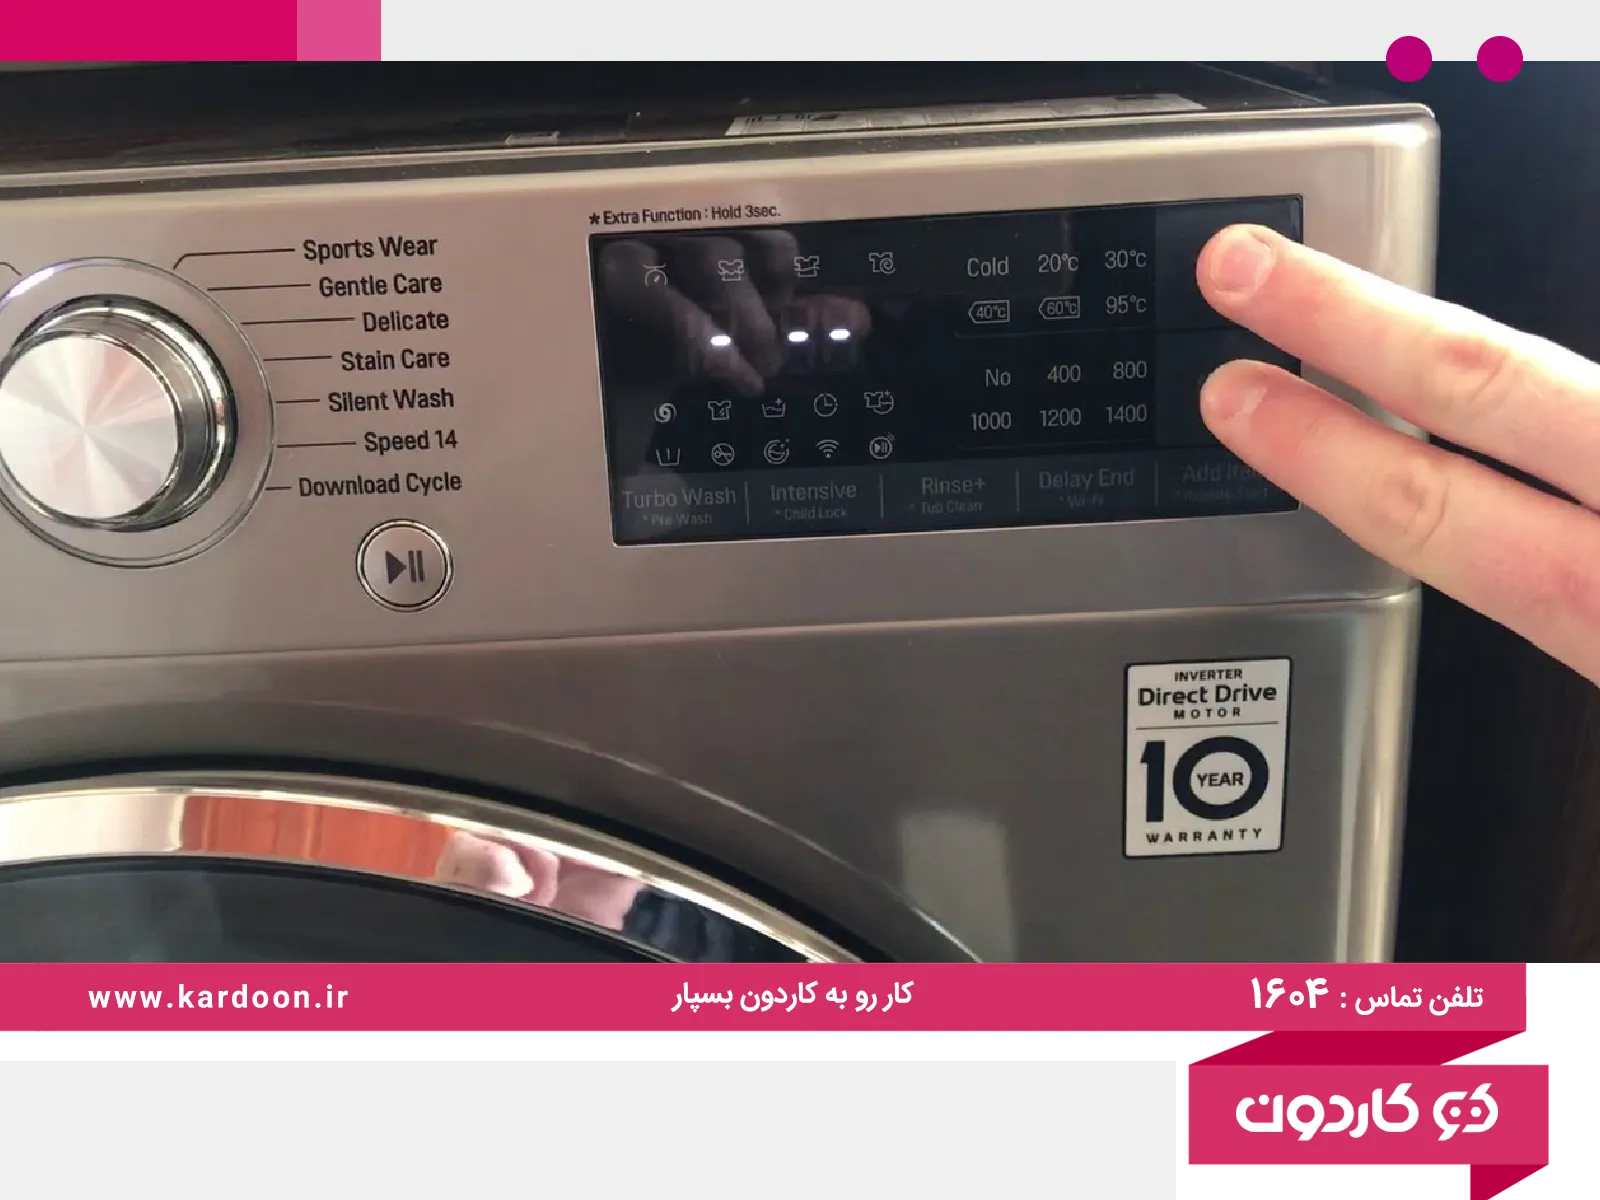 How to set the LG washing machine timer